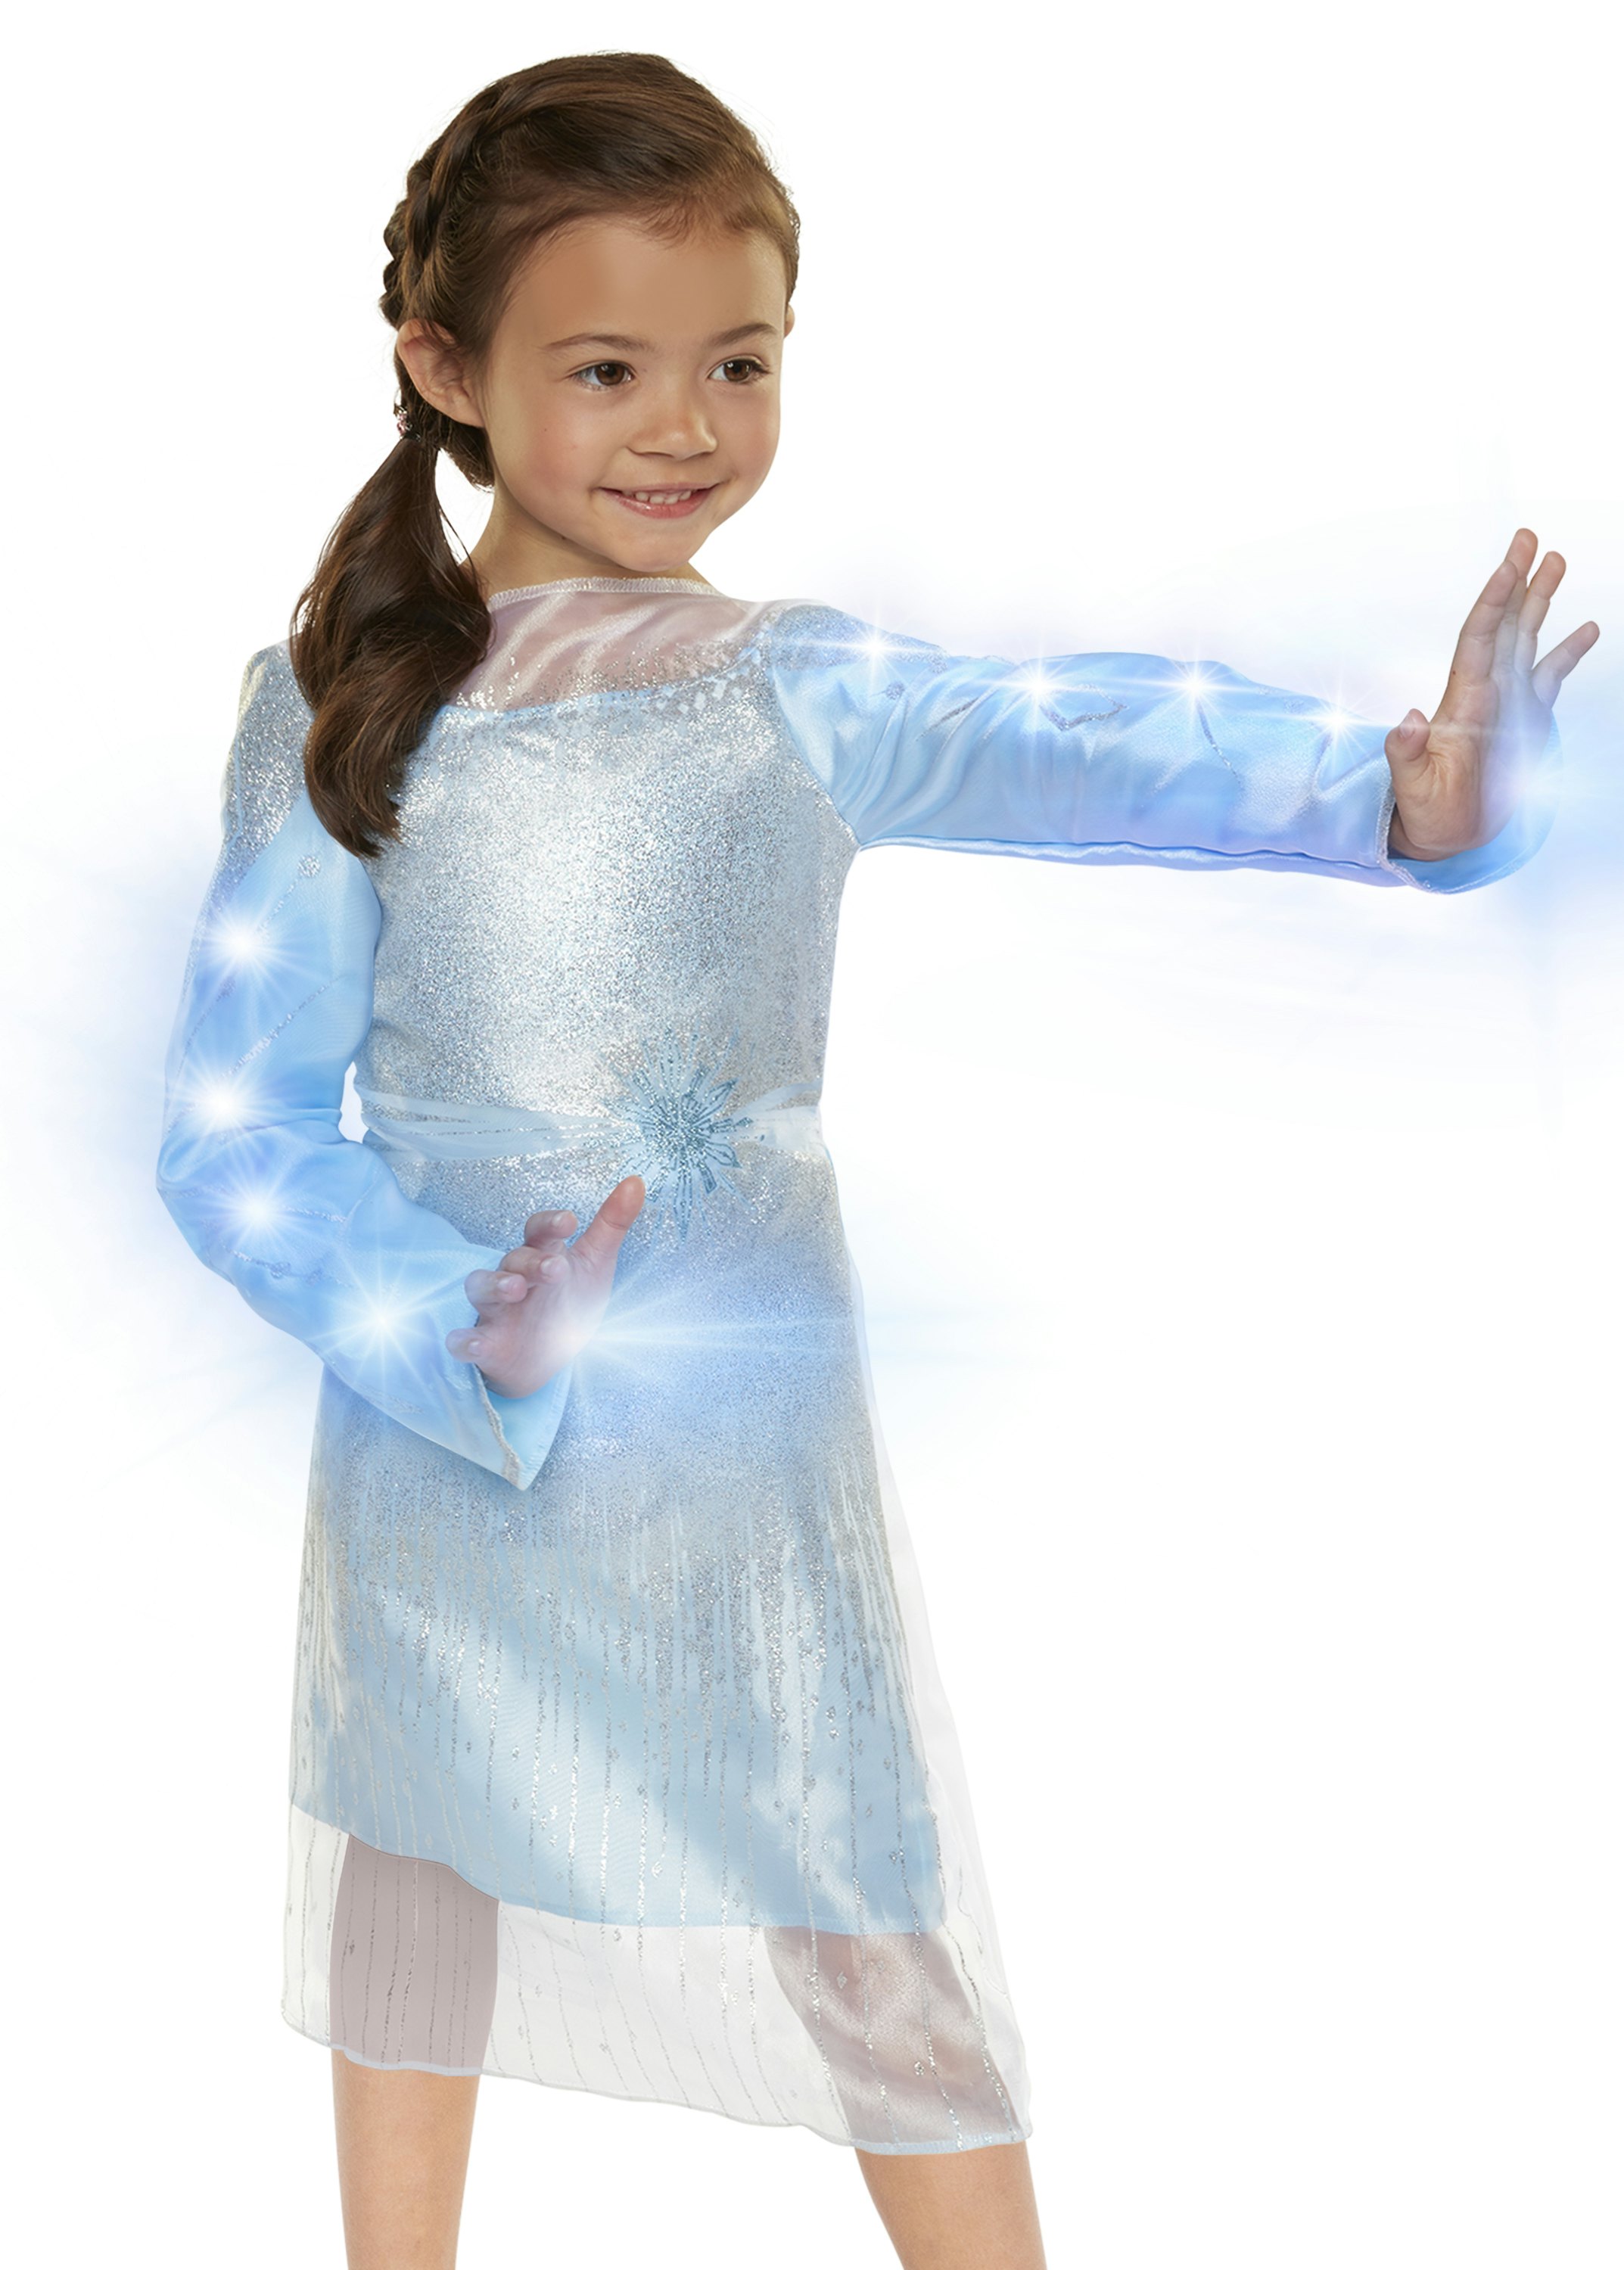 The Light-Up 'Frozen 2' Elsa Dress At Target Is Actual #Goals